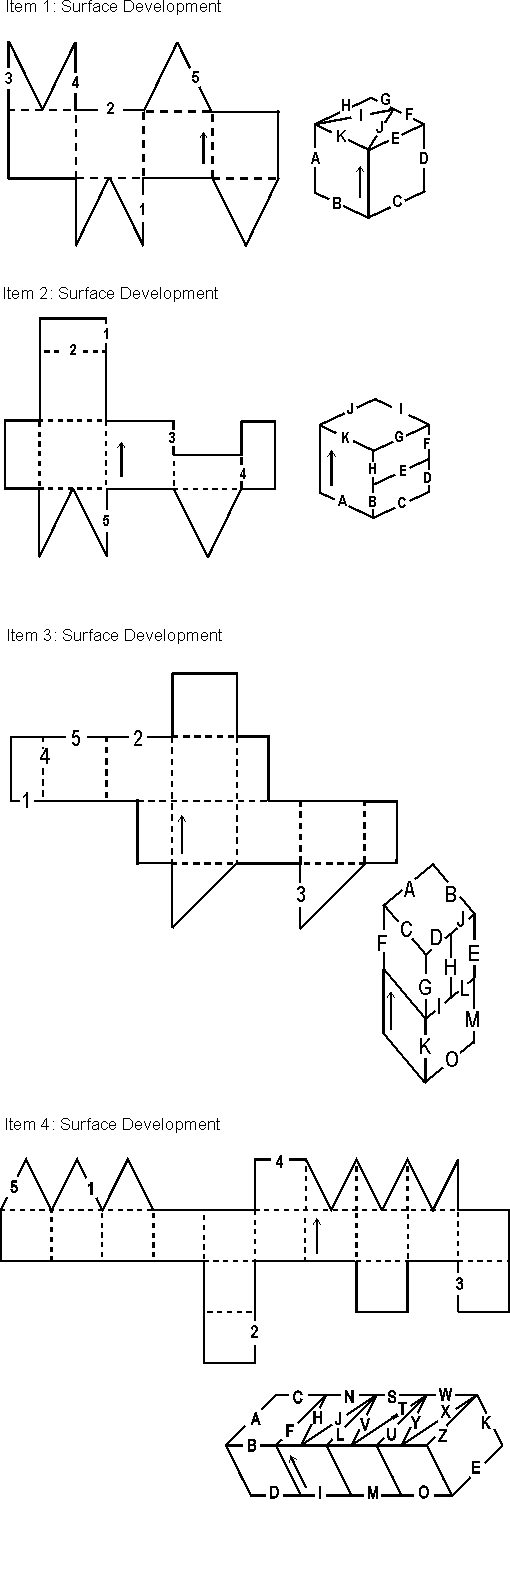 Item 1-4: Surface Development diagrams